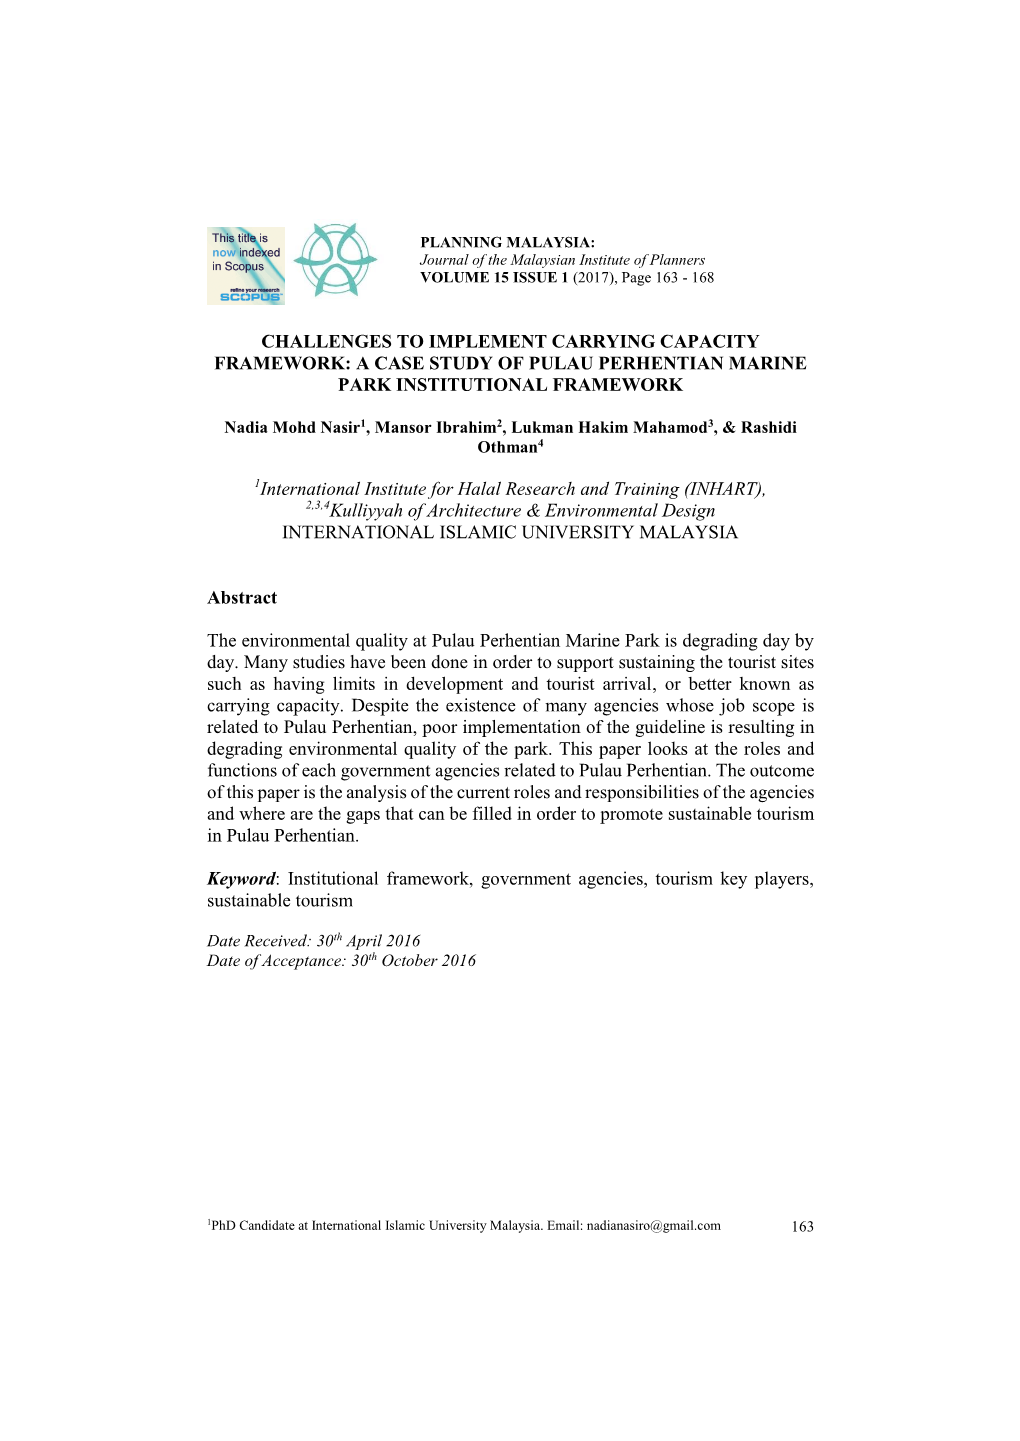 A Case Study of Pulau Perhentian Marine Park Institutional Framework